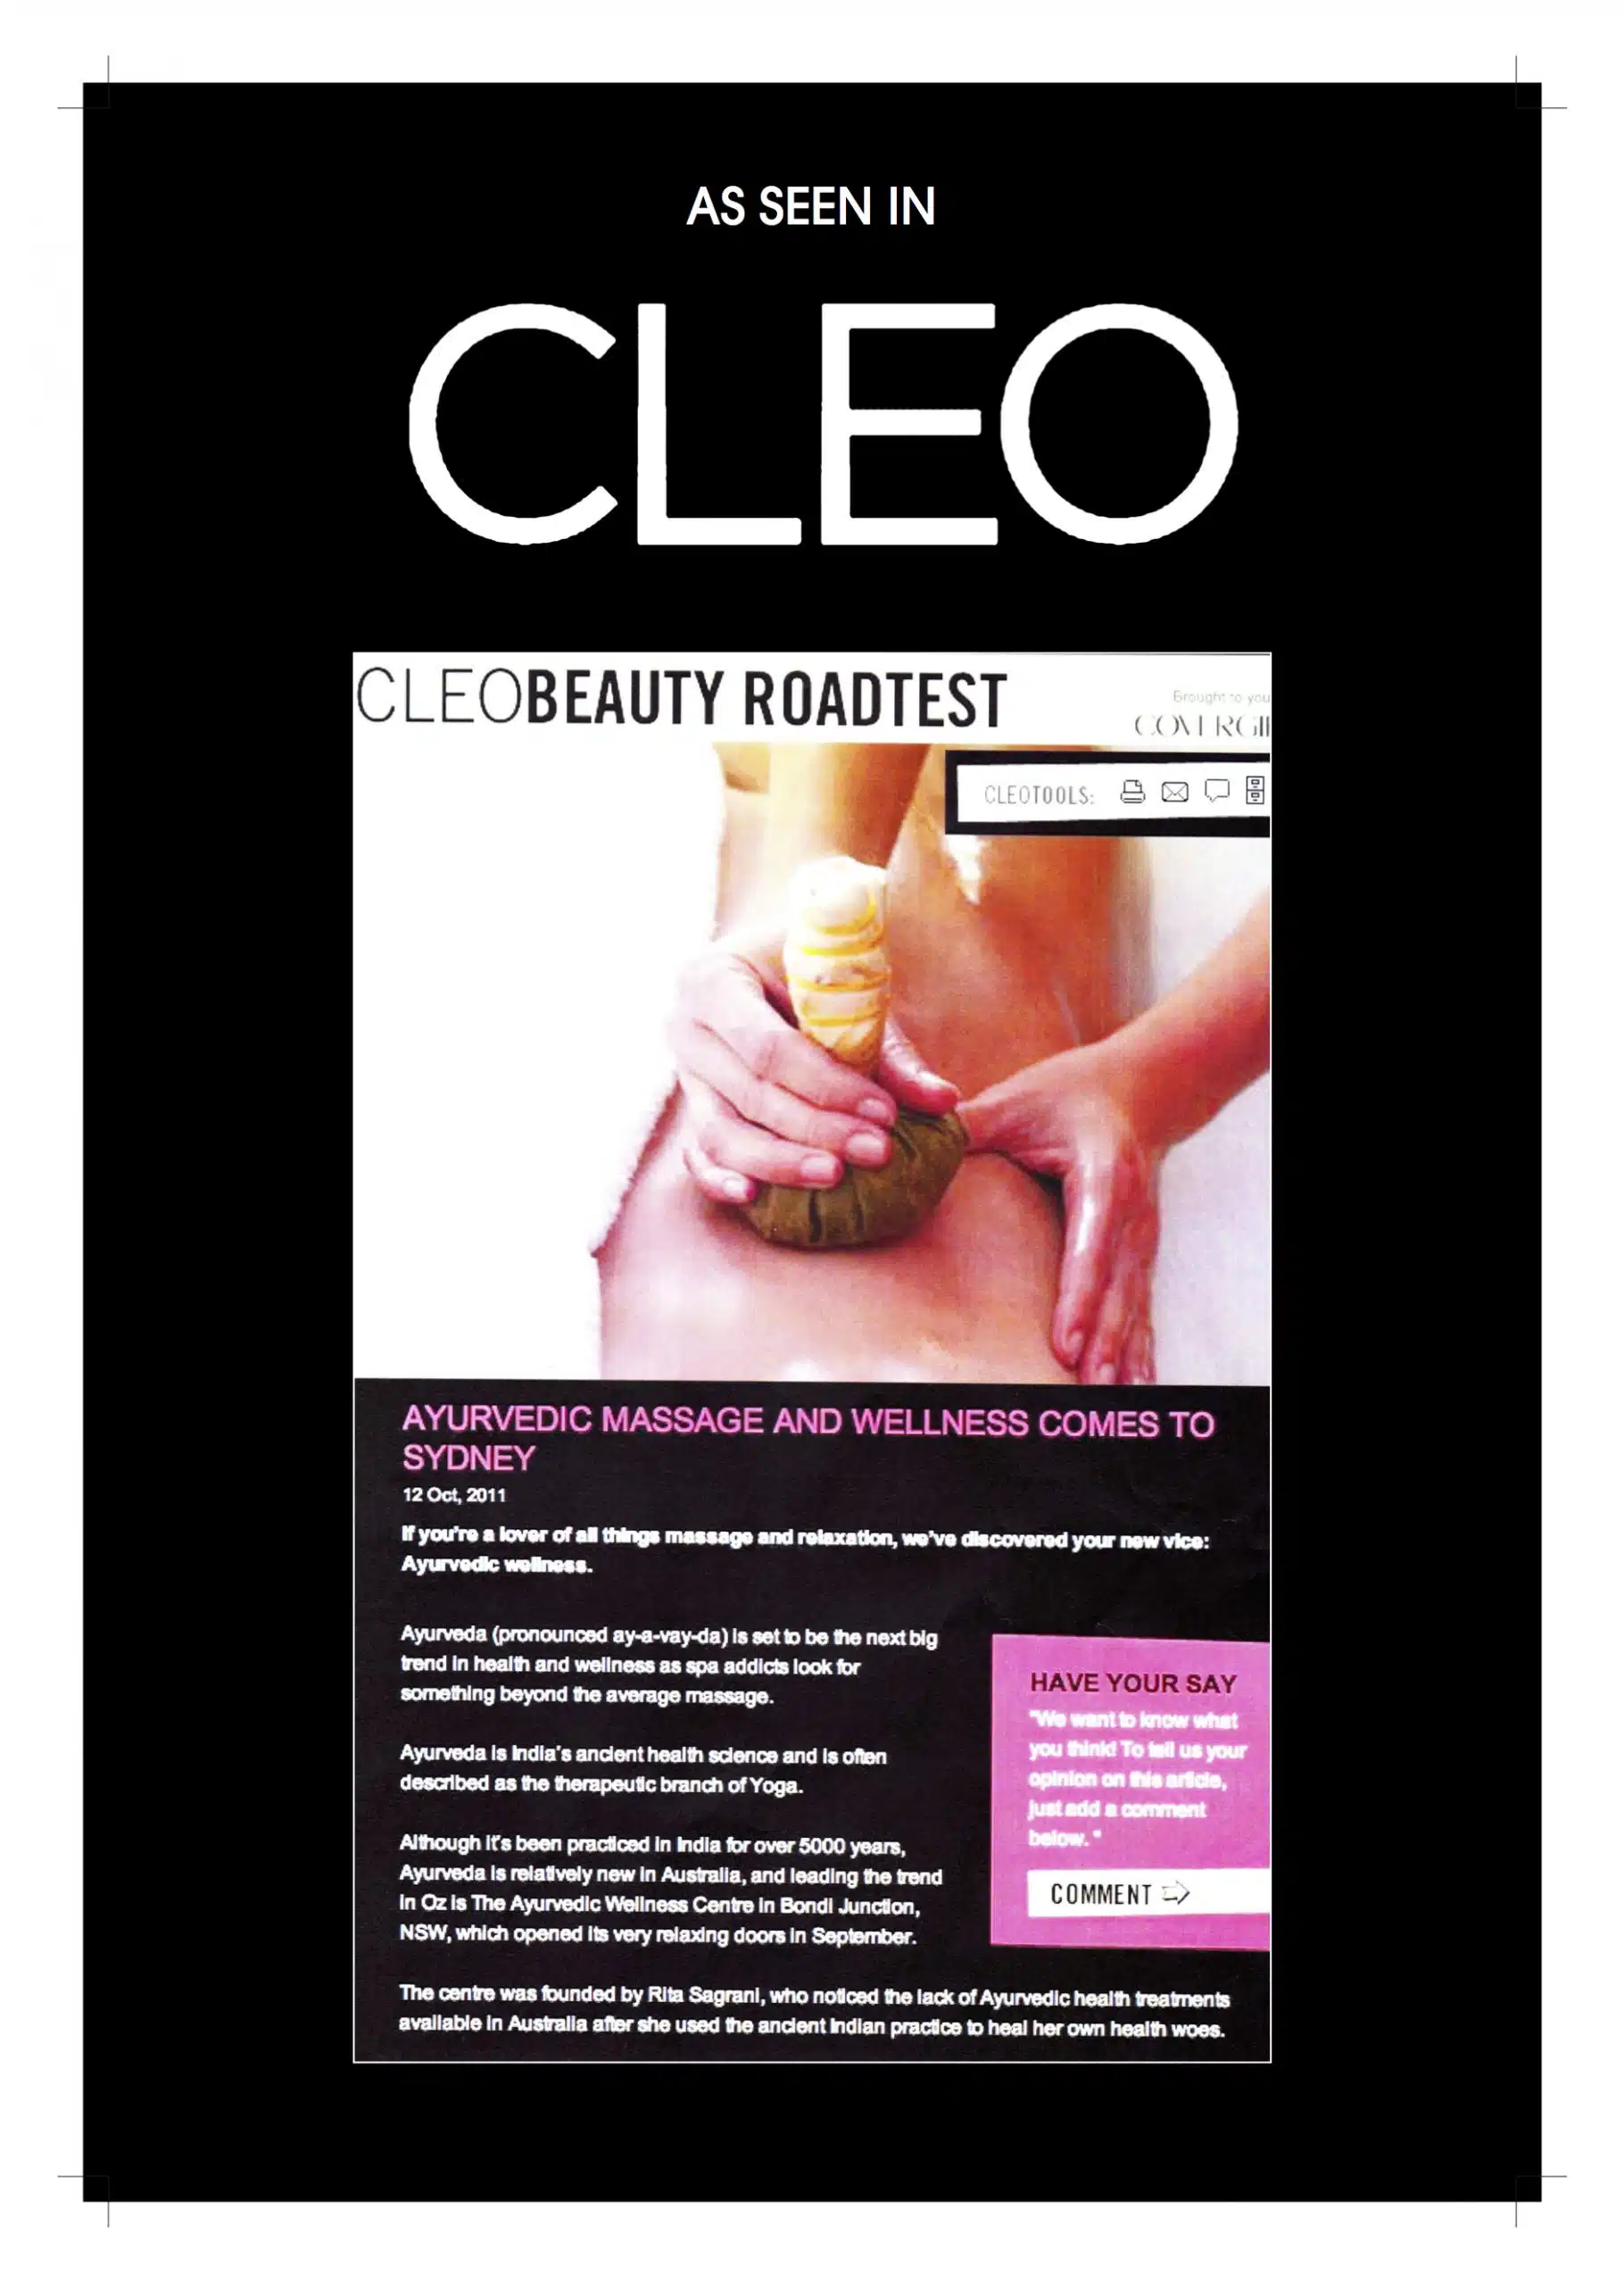 Cleo magazine artice about ayurvedic wellness centre